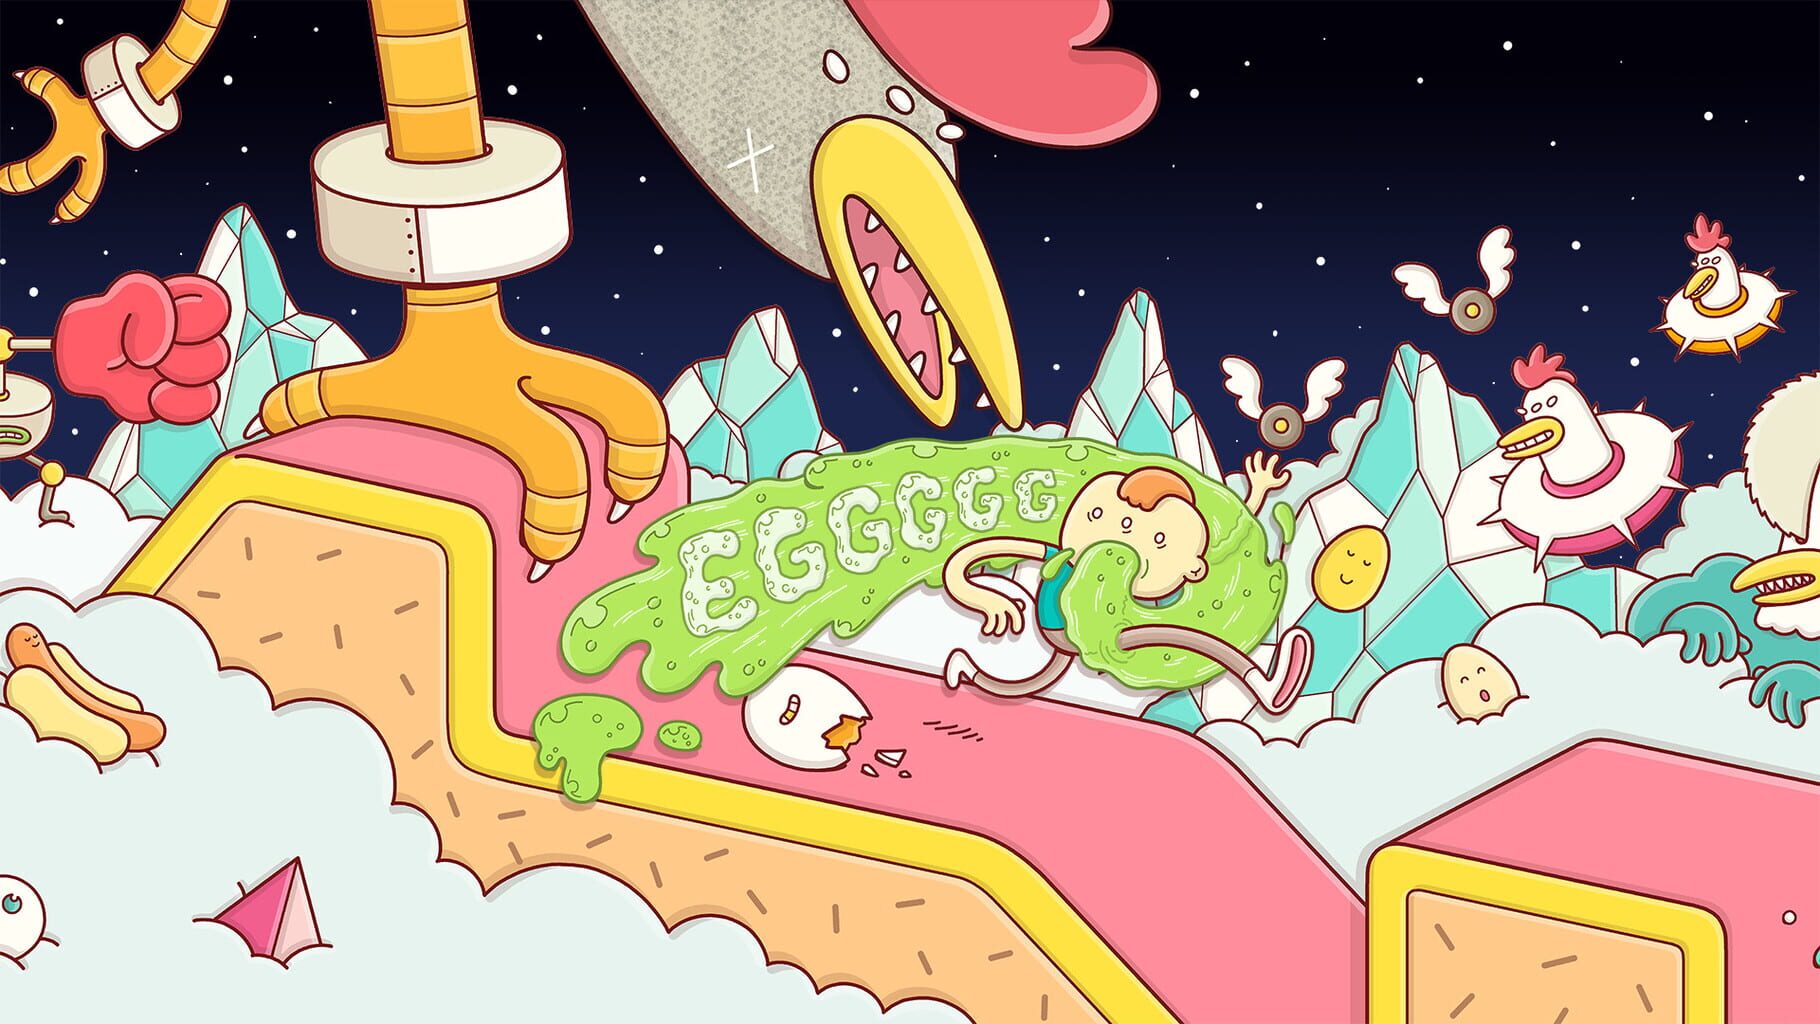 Eggggg - The platform puker screenshots